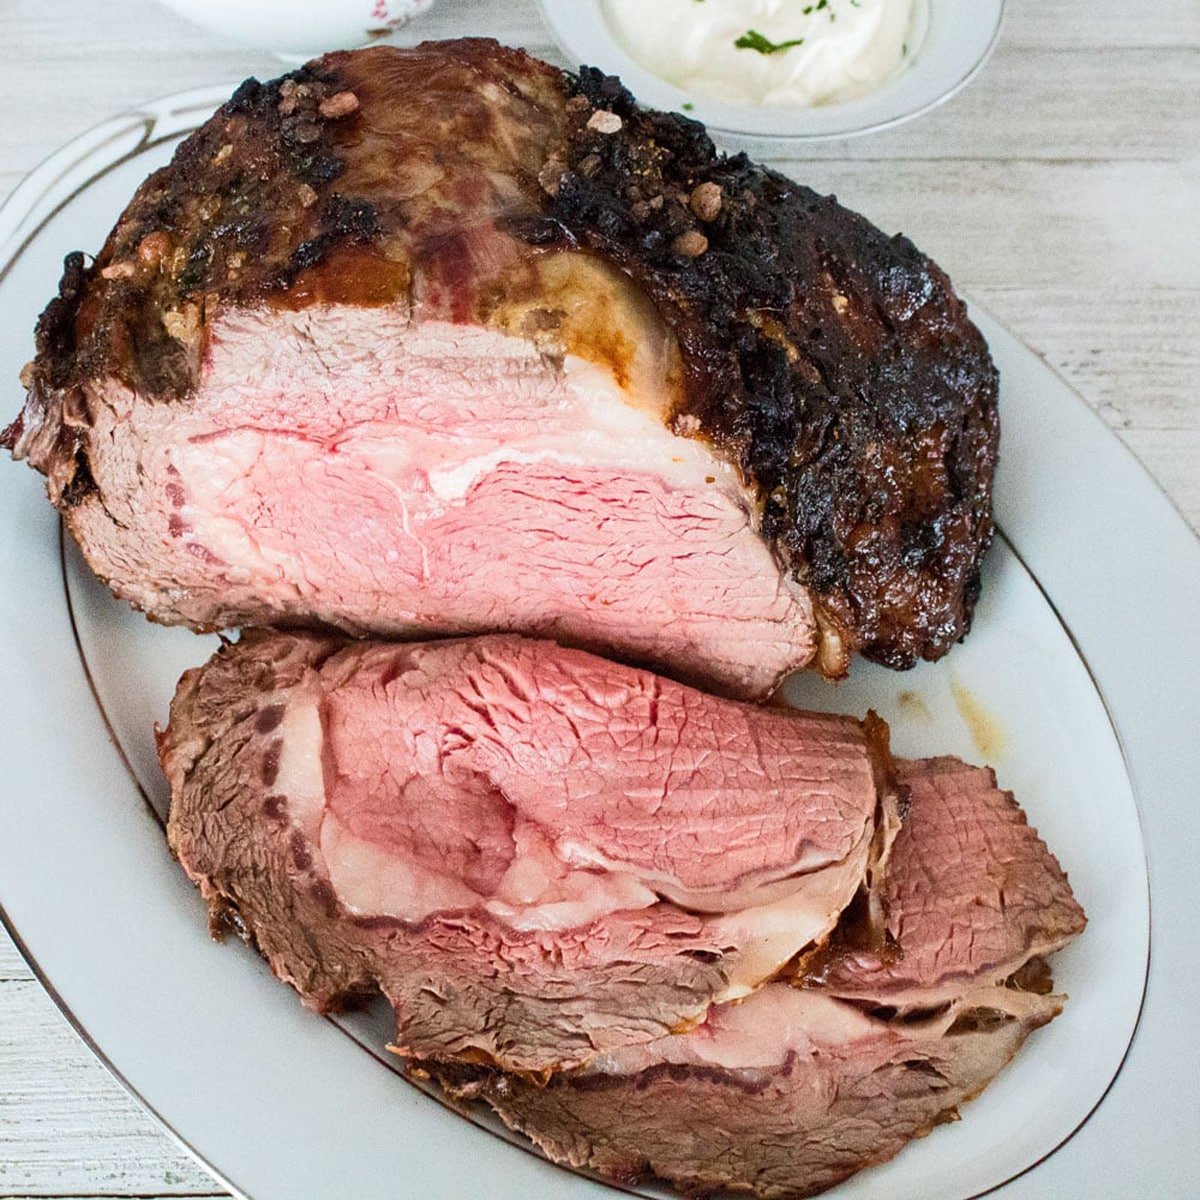 Prime rib roast on a serving plate.